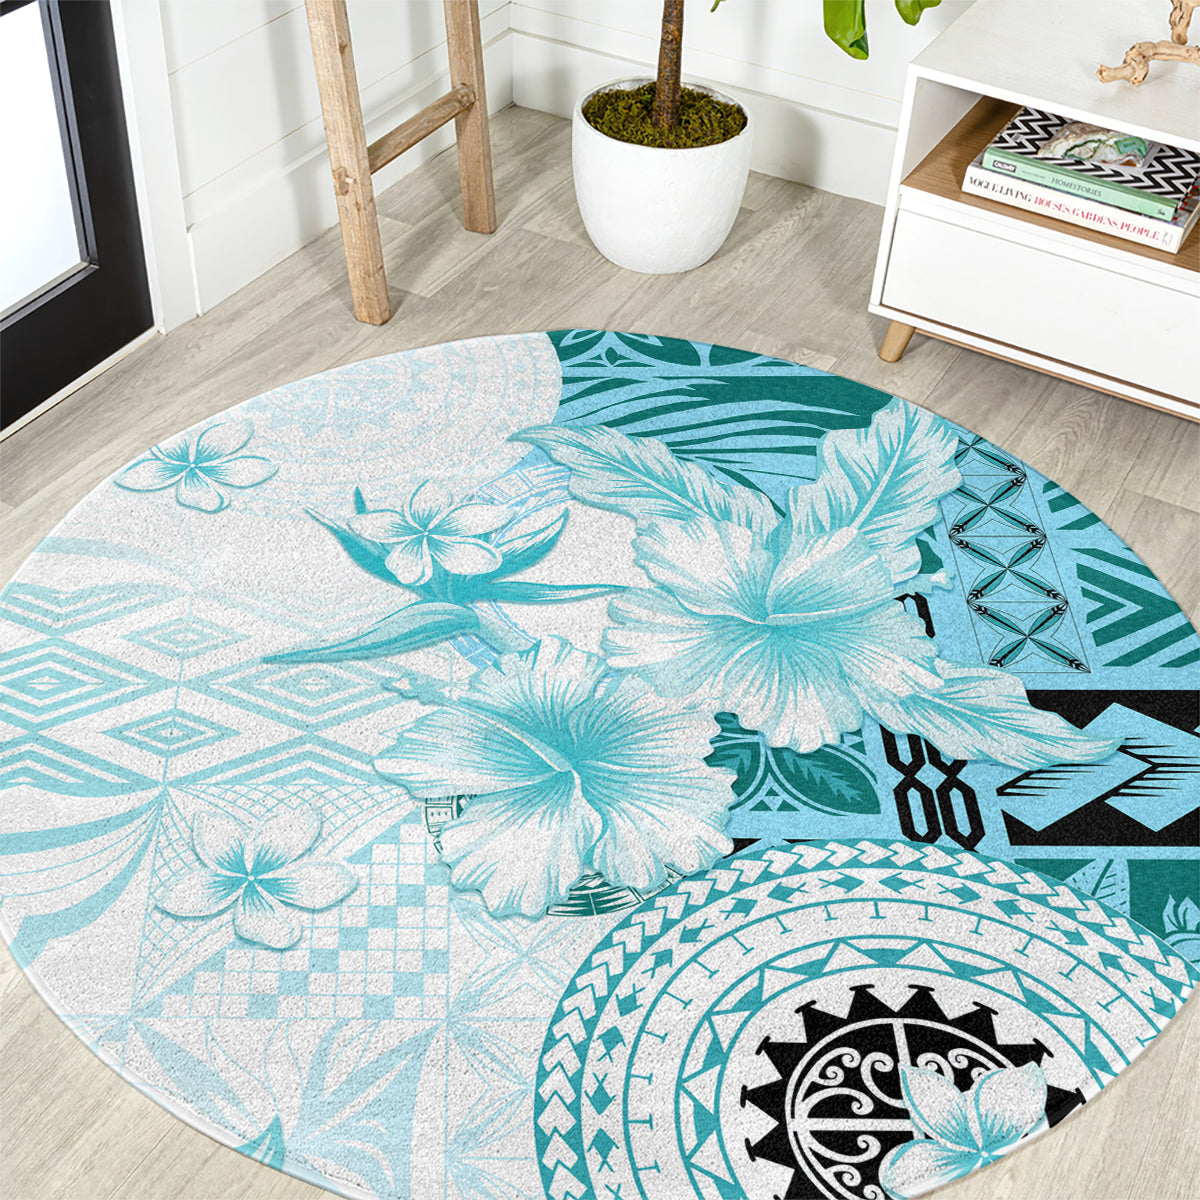 Samoa Siapo Pattern With Teal Hibiscus Round Carpet